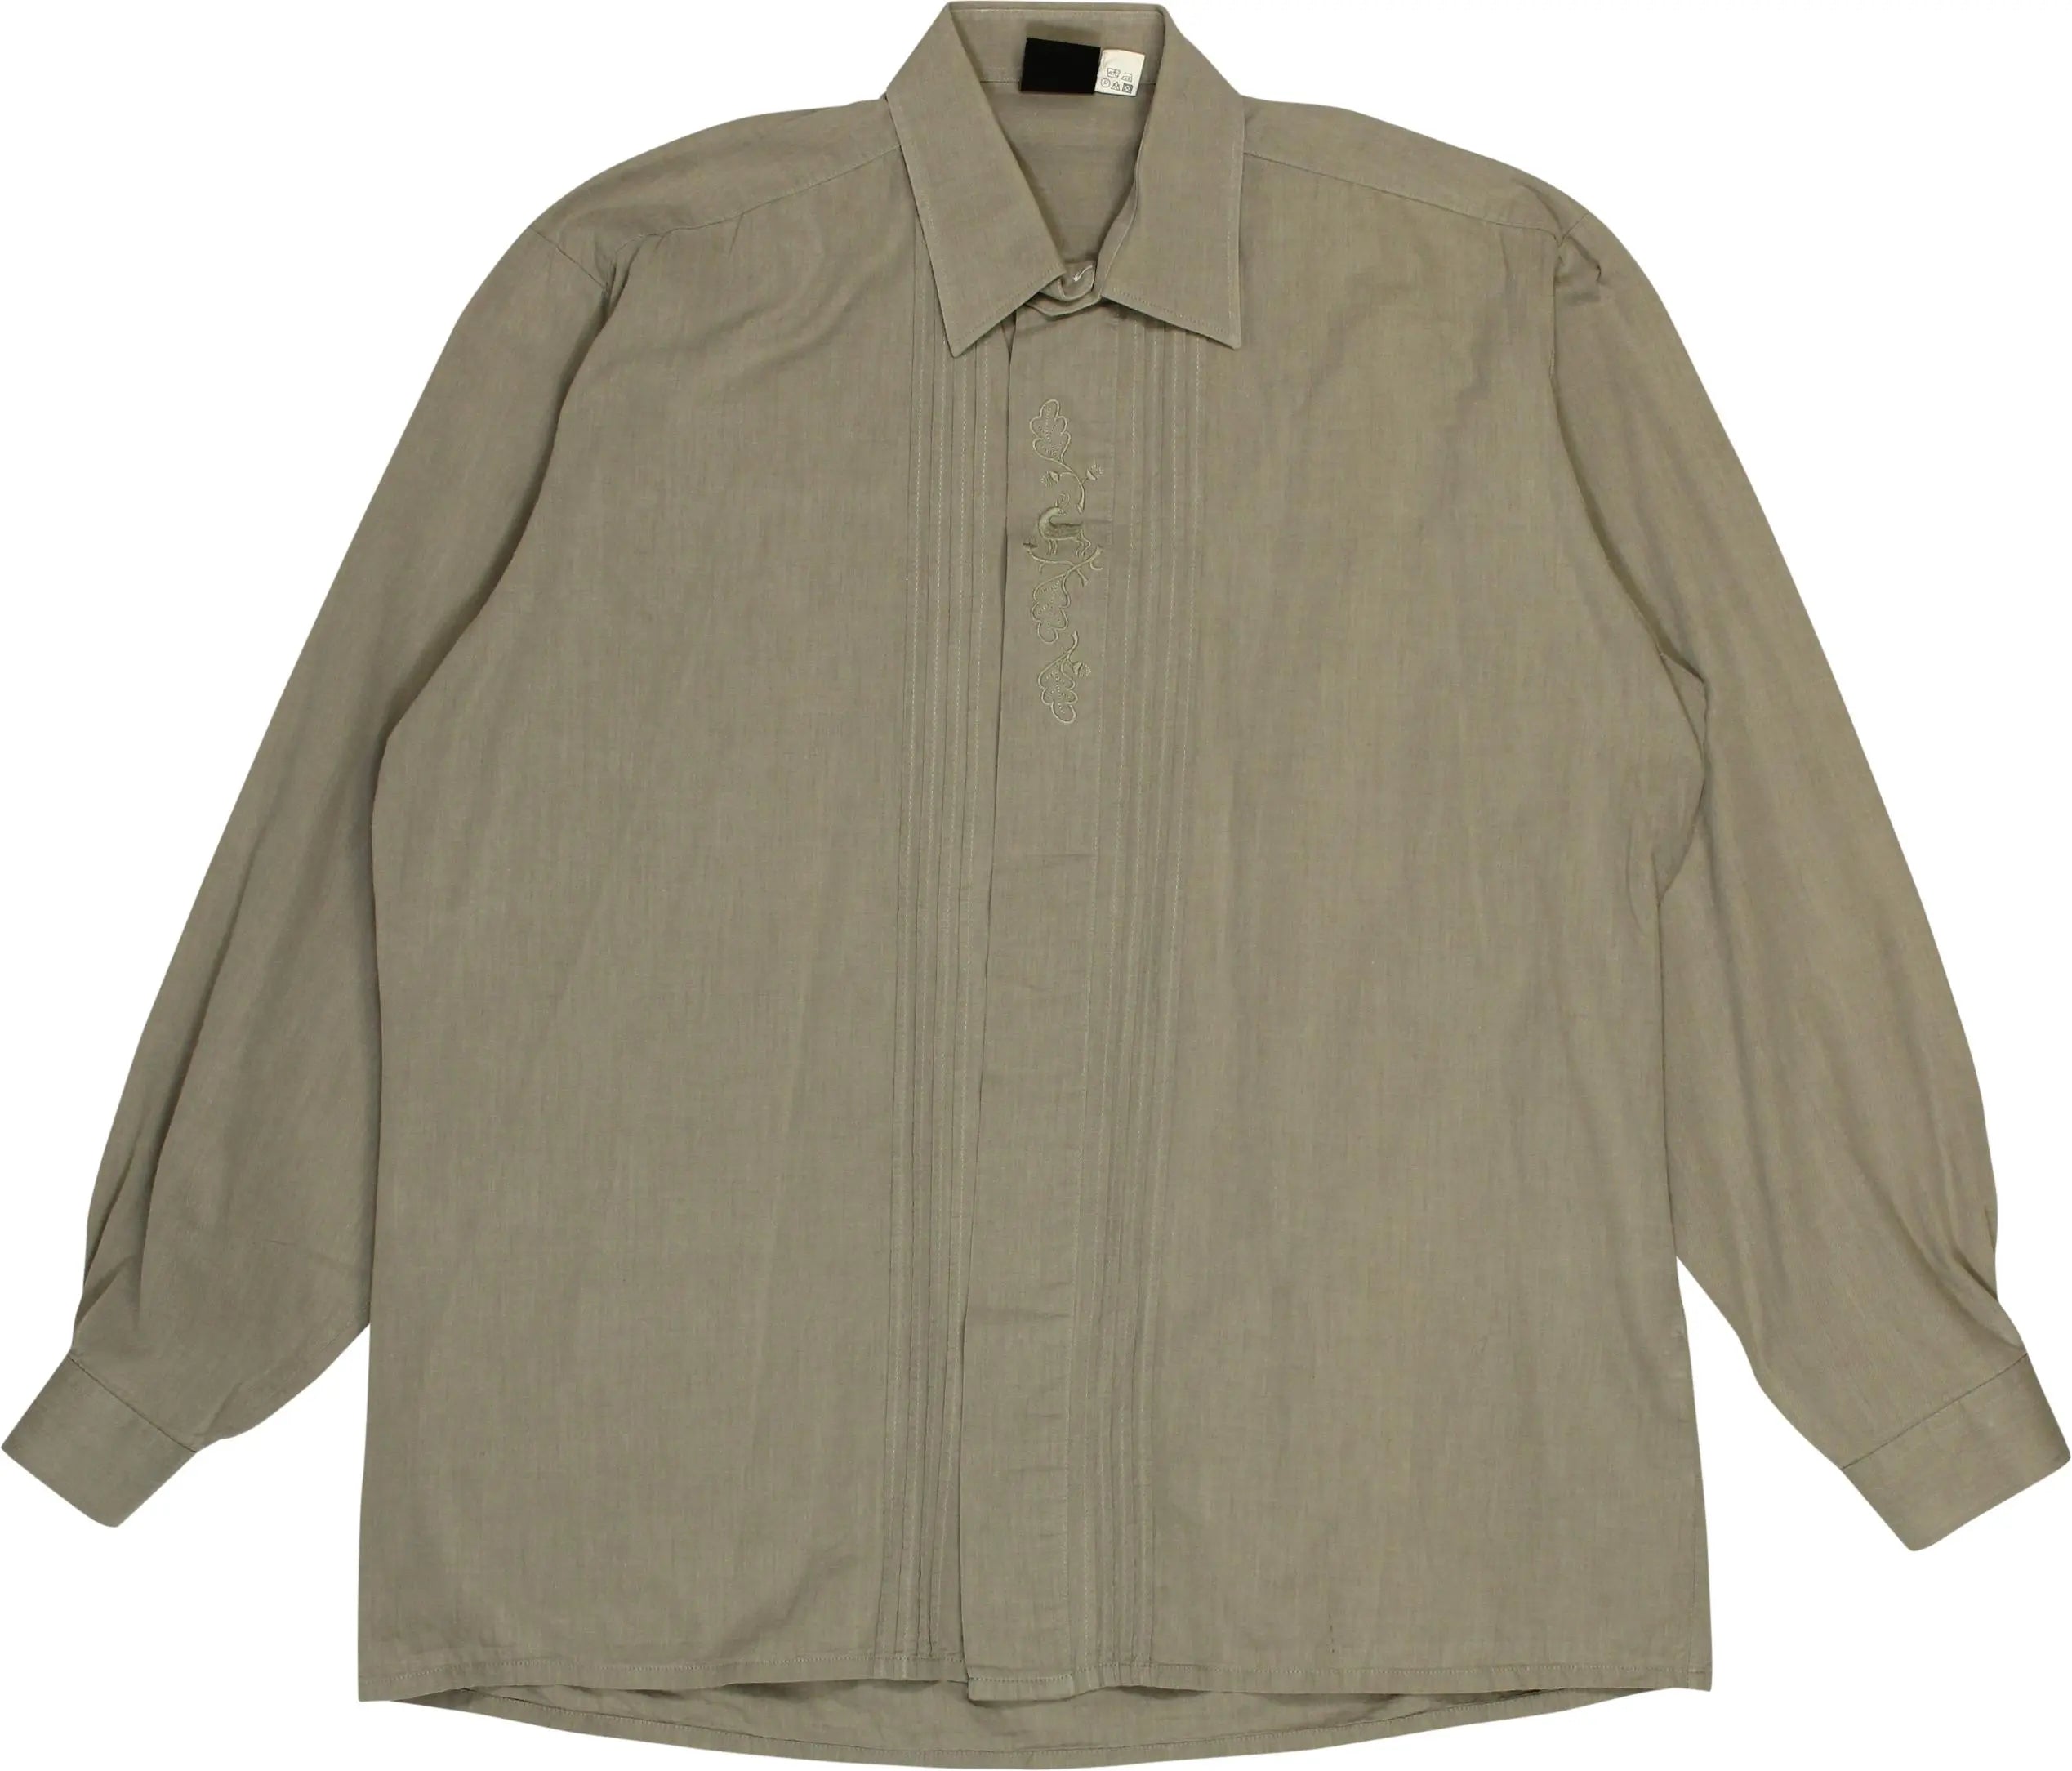 Hammerschmid - Trachten Shirt- ThriftTale.com - Vintage and second handclothing